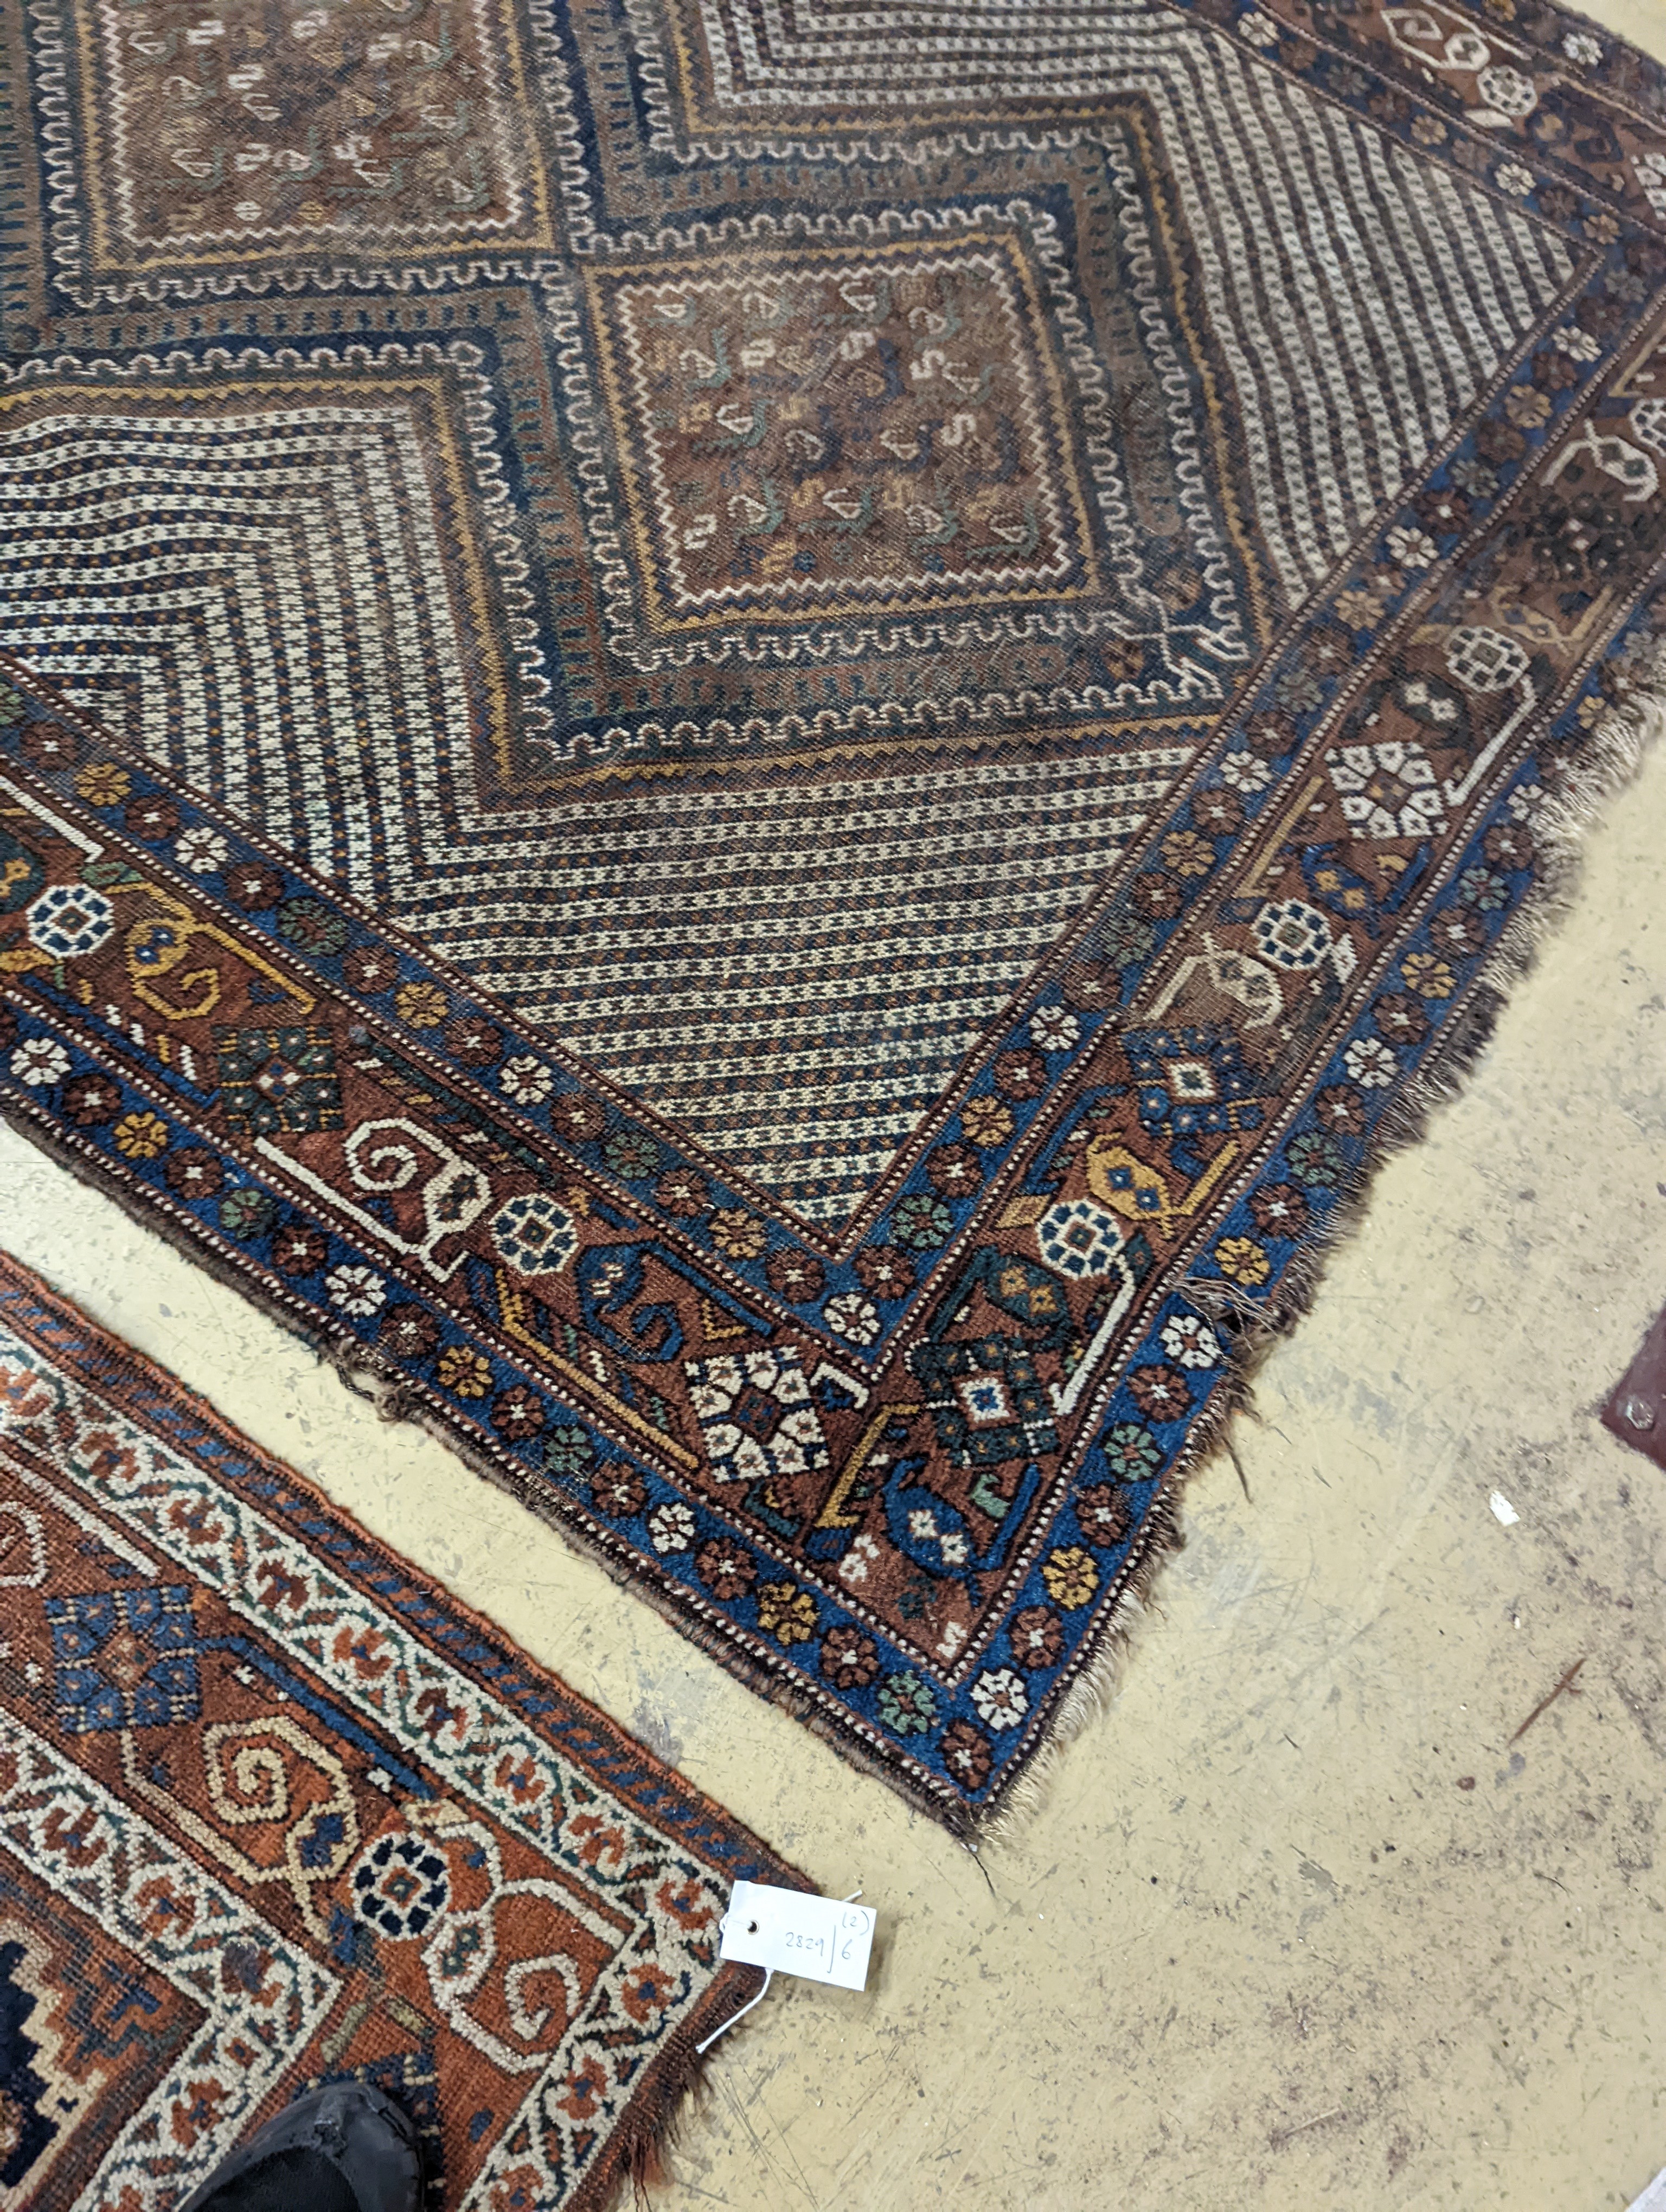 Two antique Caucasian rugs, larger 200 x 135cm